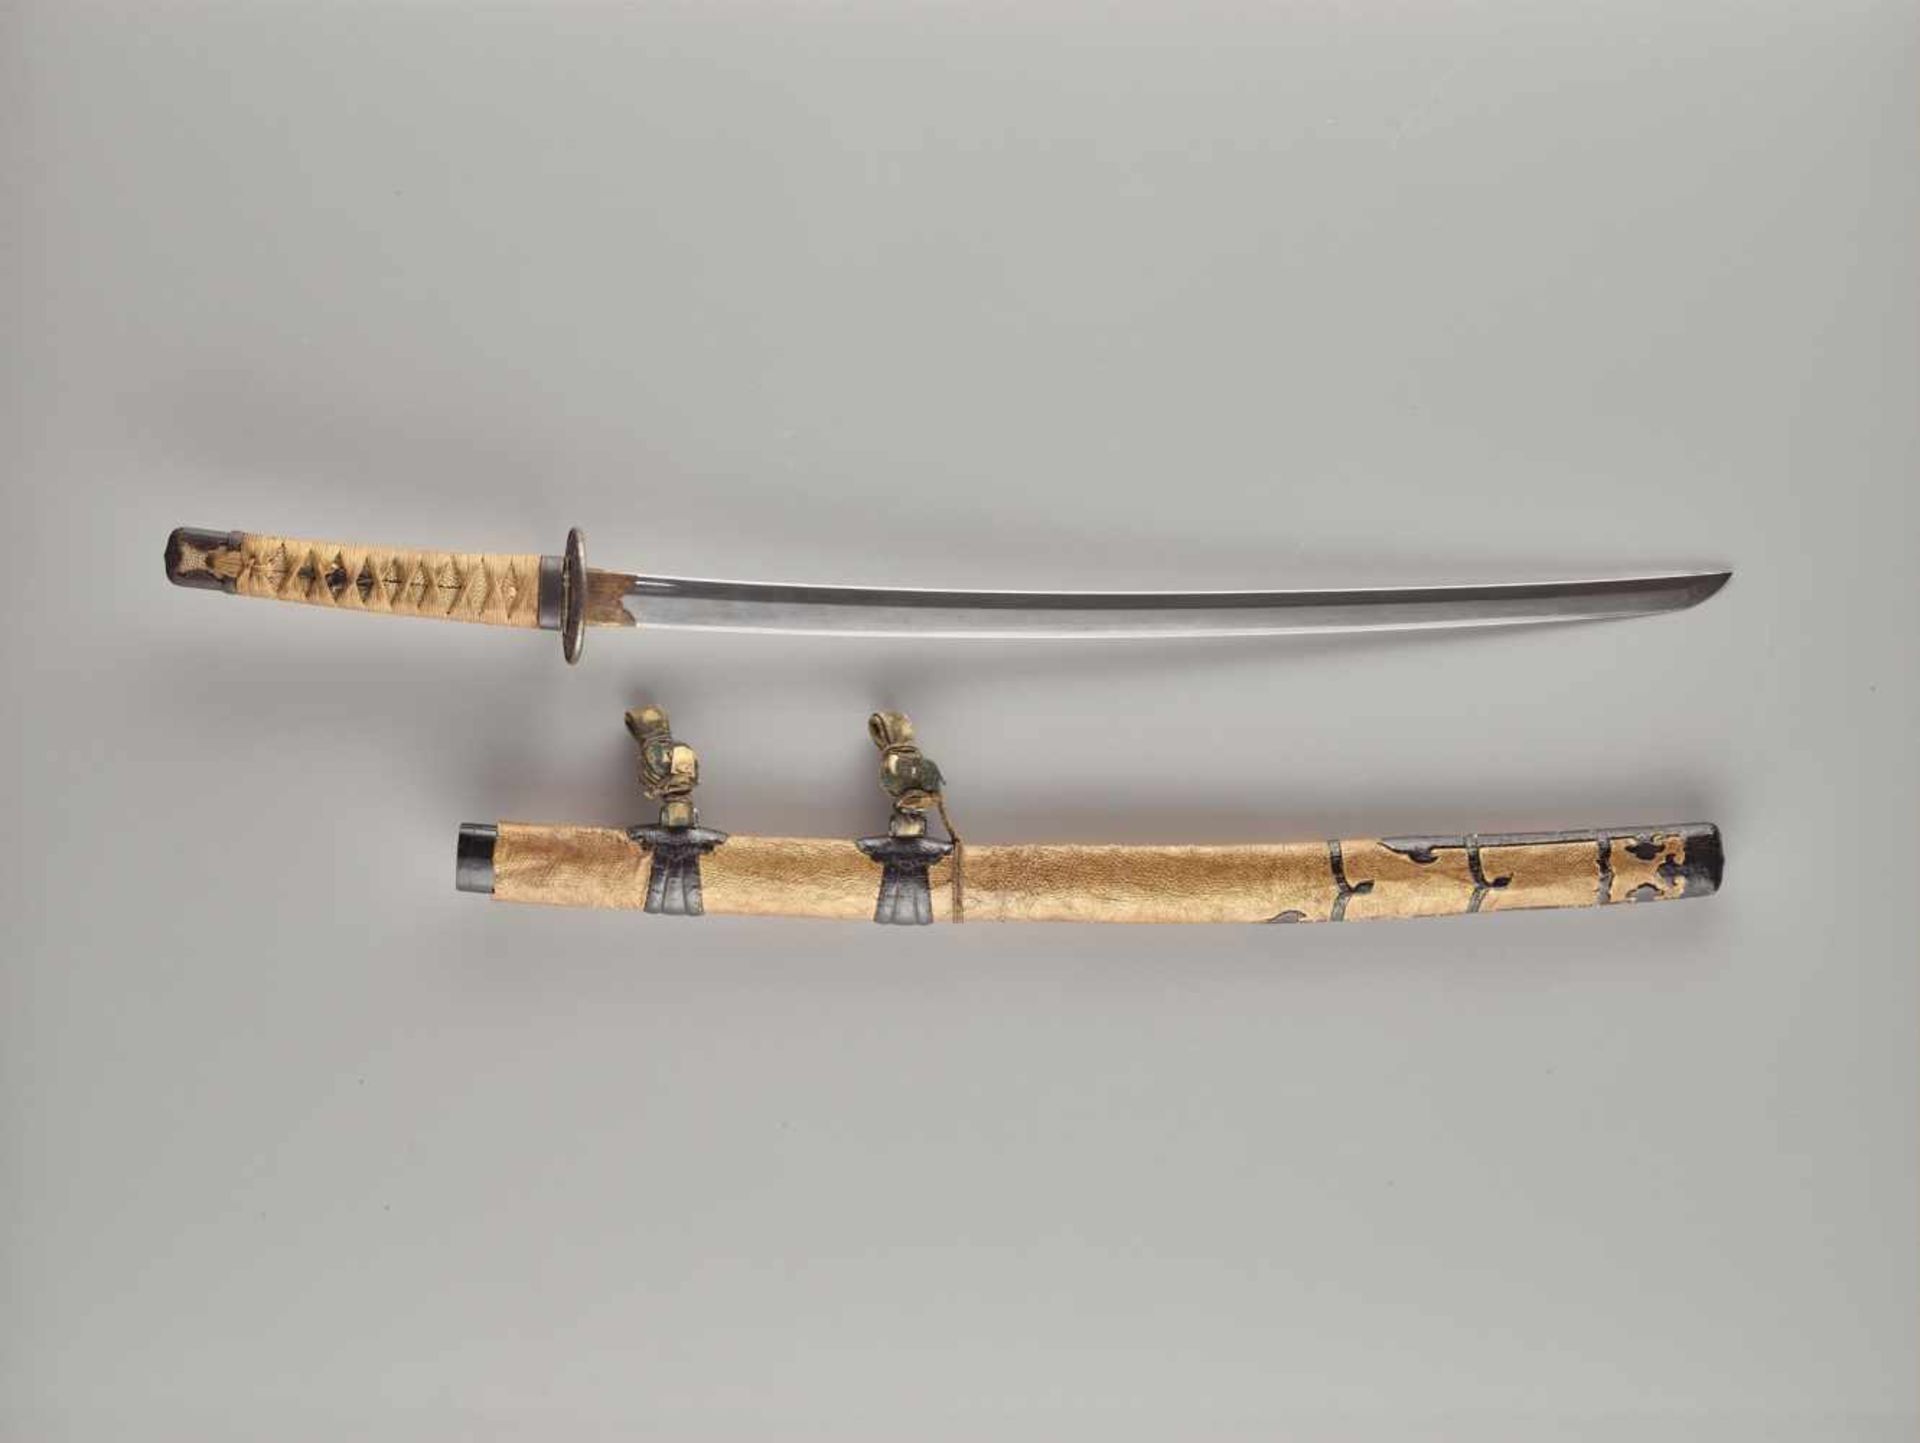 A KATANA Japan, possibly Muromachi period (1336 – 1573), around 14th century (blade); c. 17th